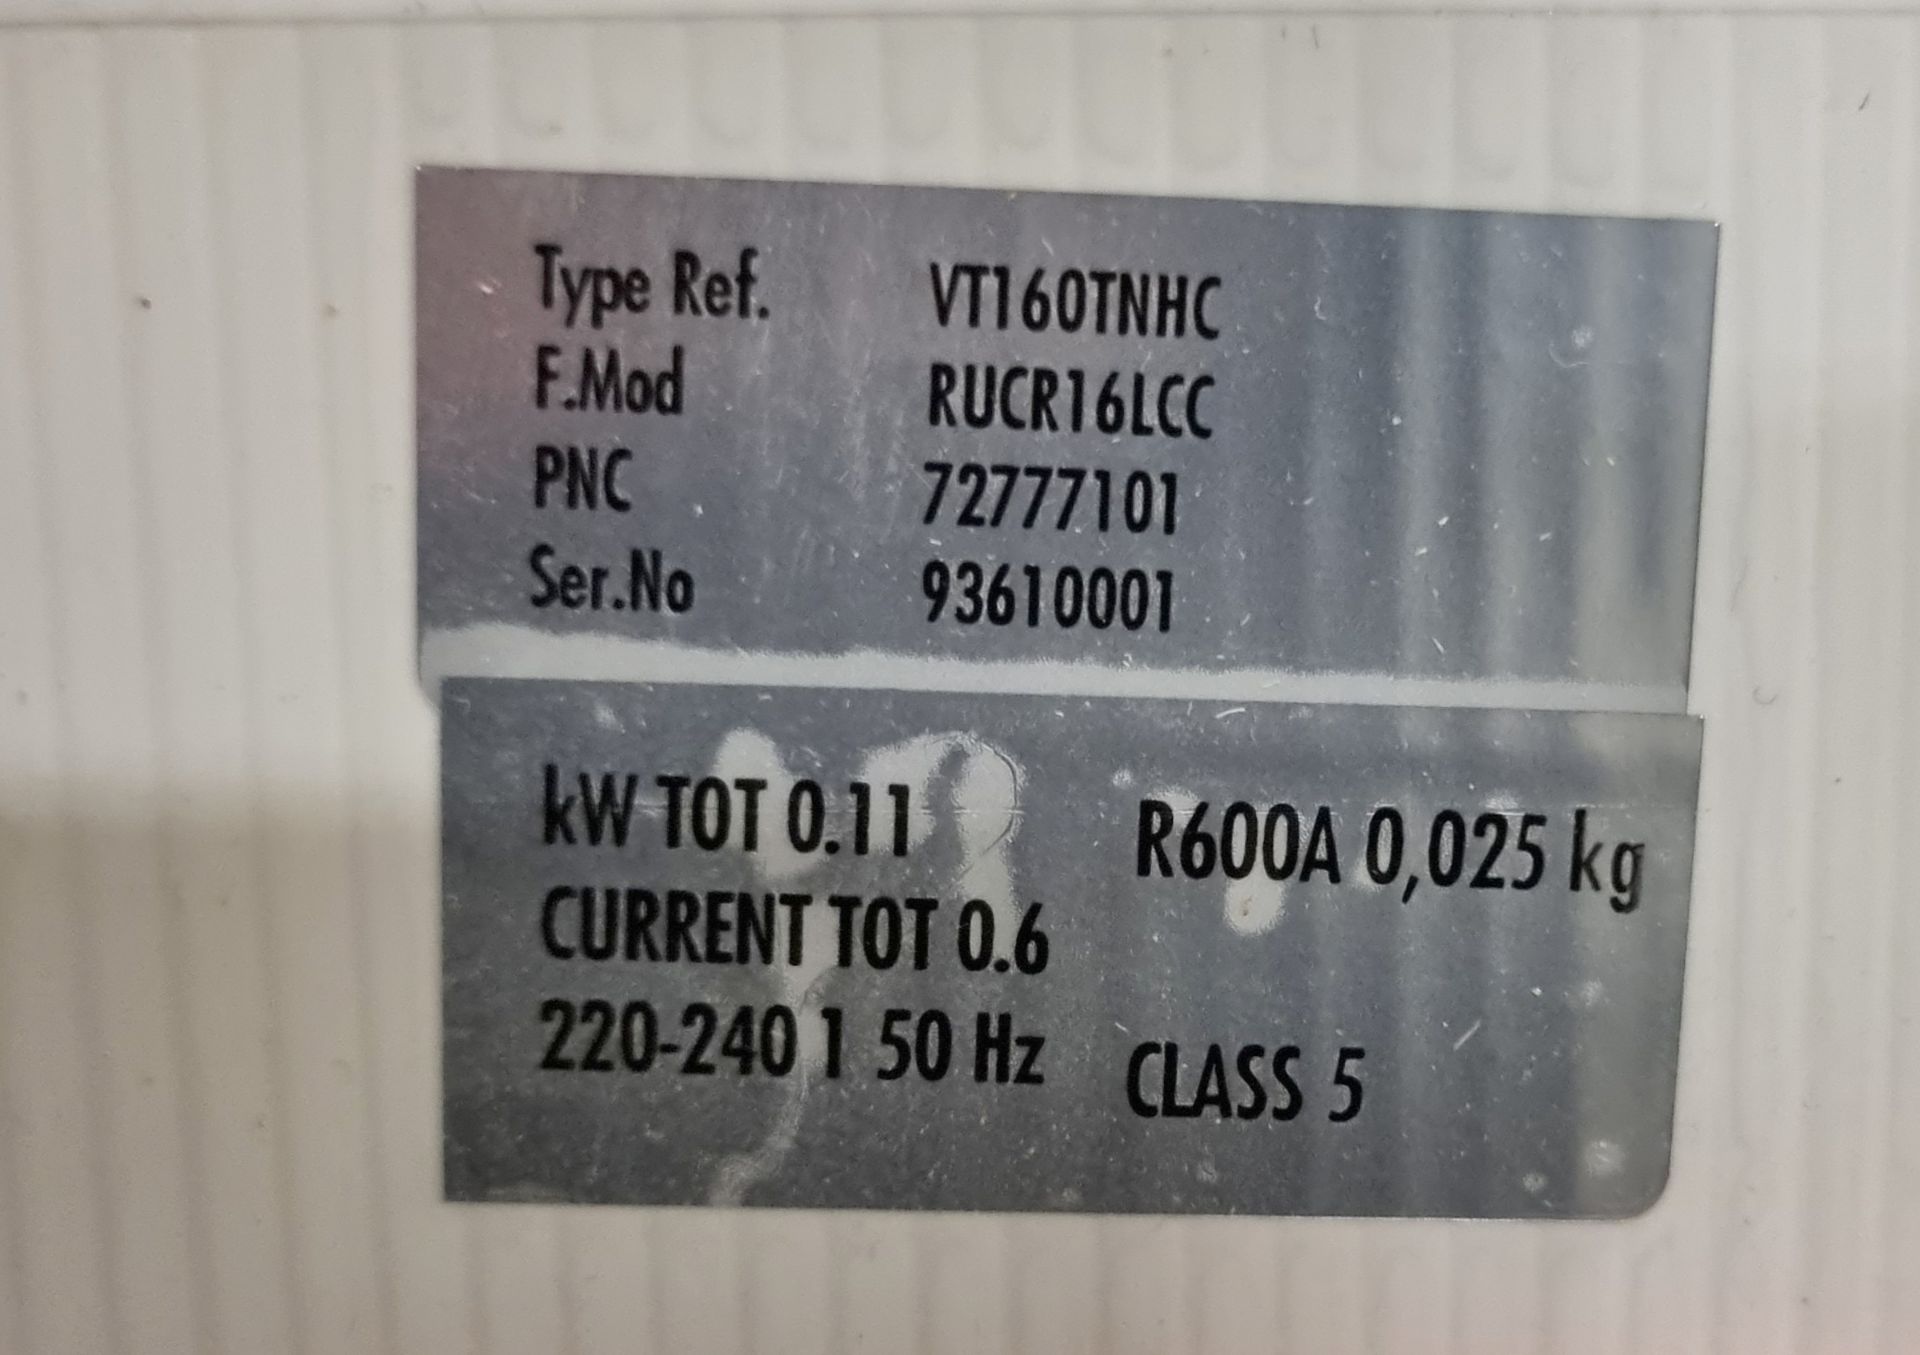 Electrolux RUCR16 undercounter fridge - W 600 x D 600 x H 670mm - Image 4 of 4